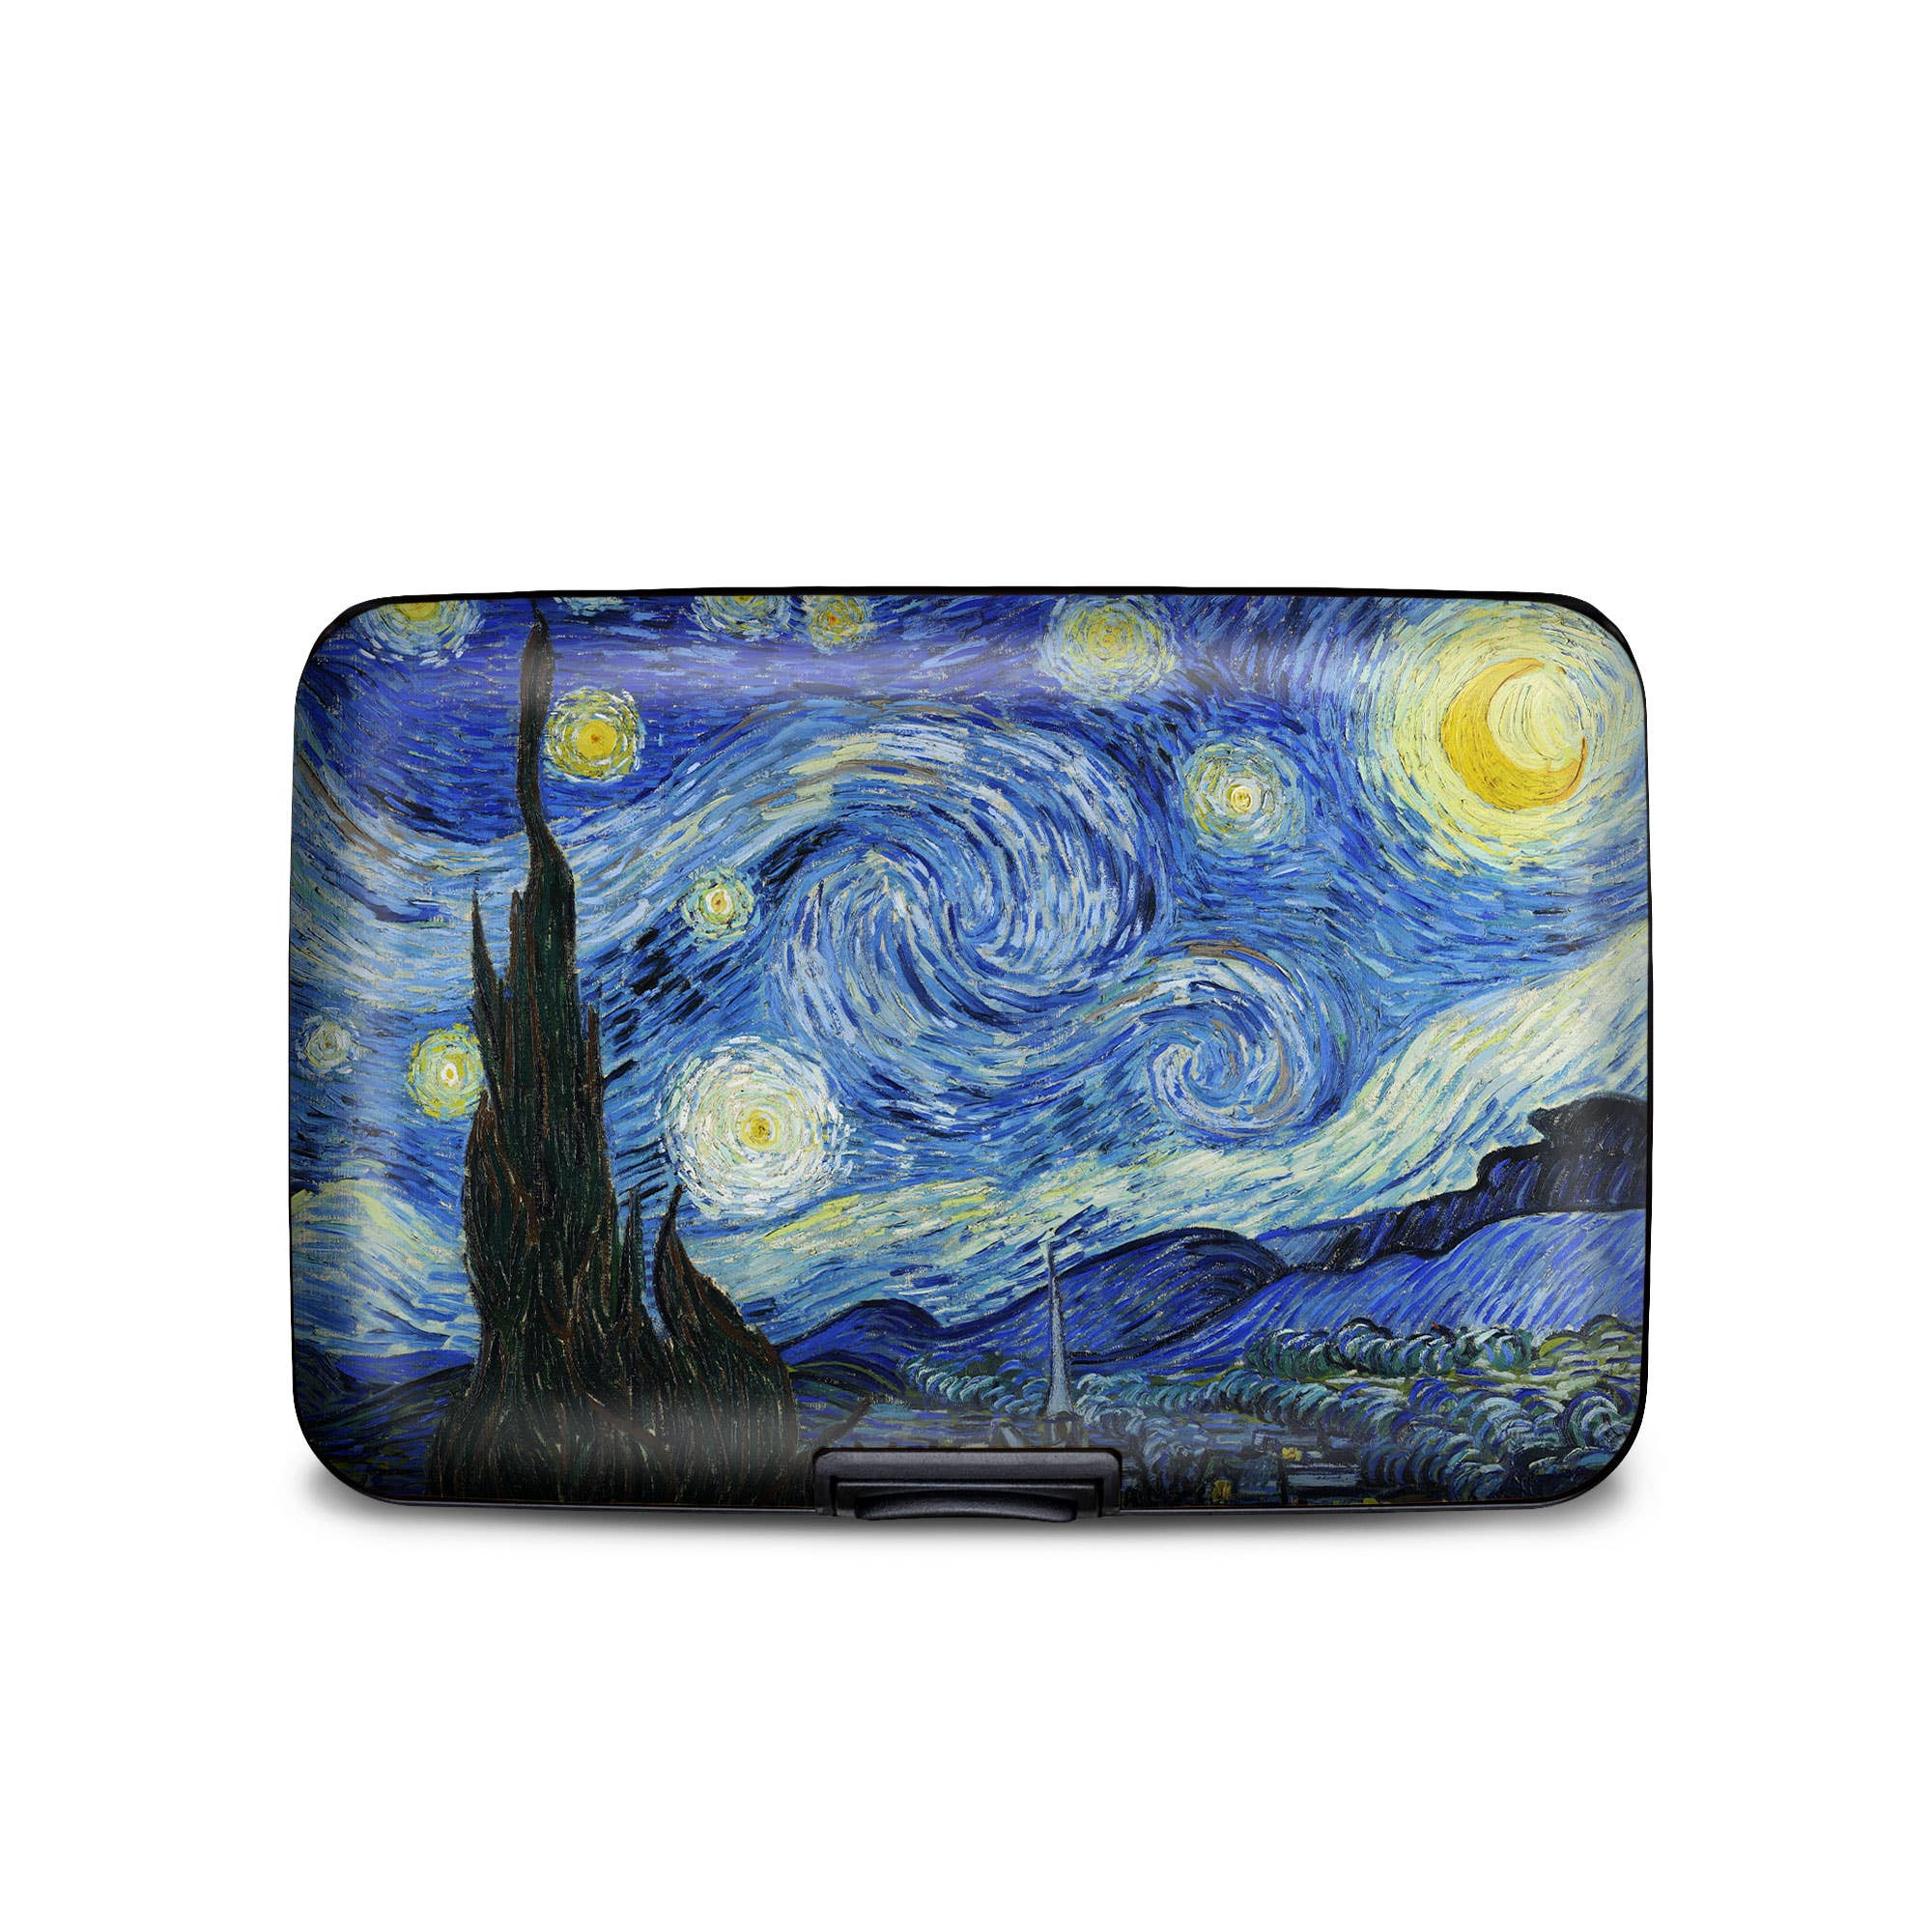 Monarque - Van Gogh - The Starry Night Armored Wallet